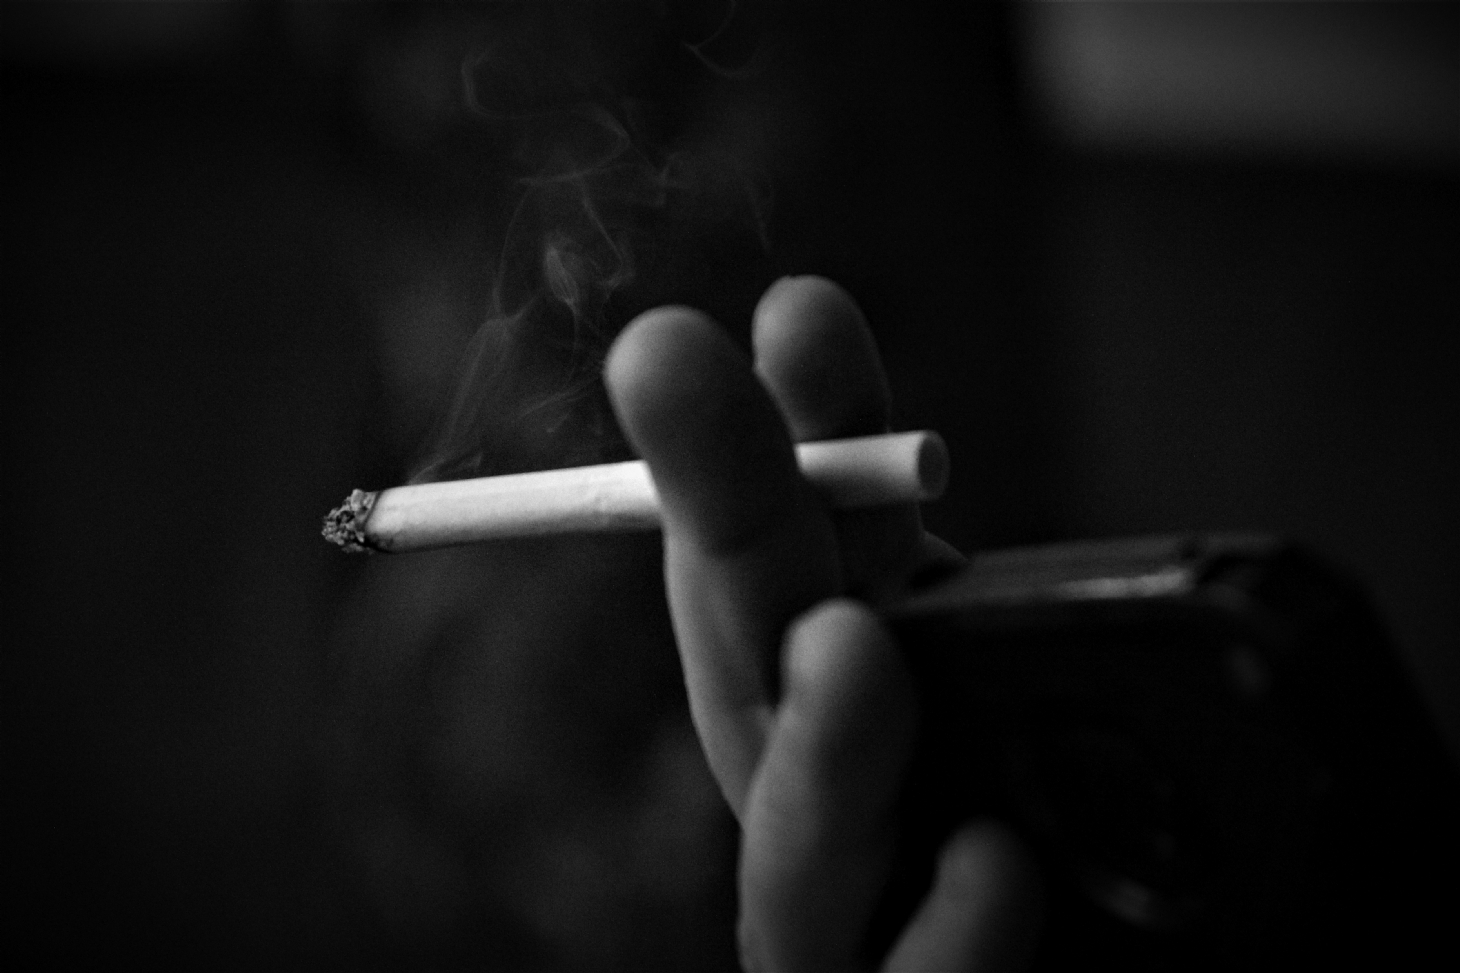 Consumo de cigarro aumenta na pandemia | Jornal da Orla